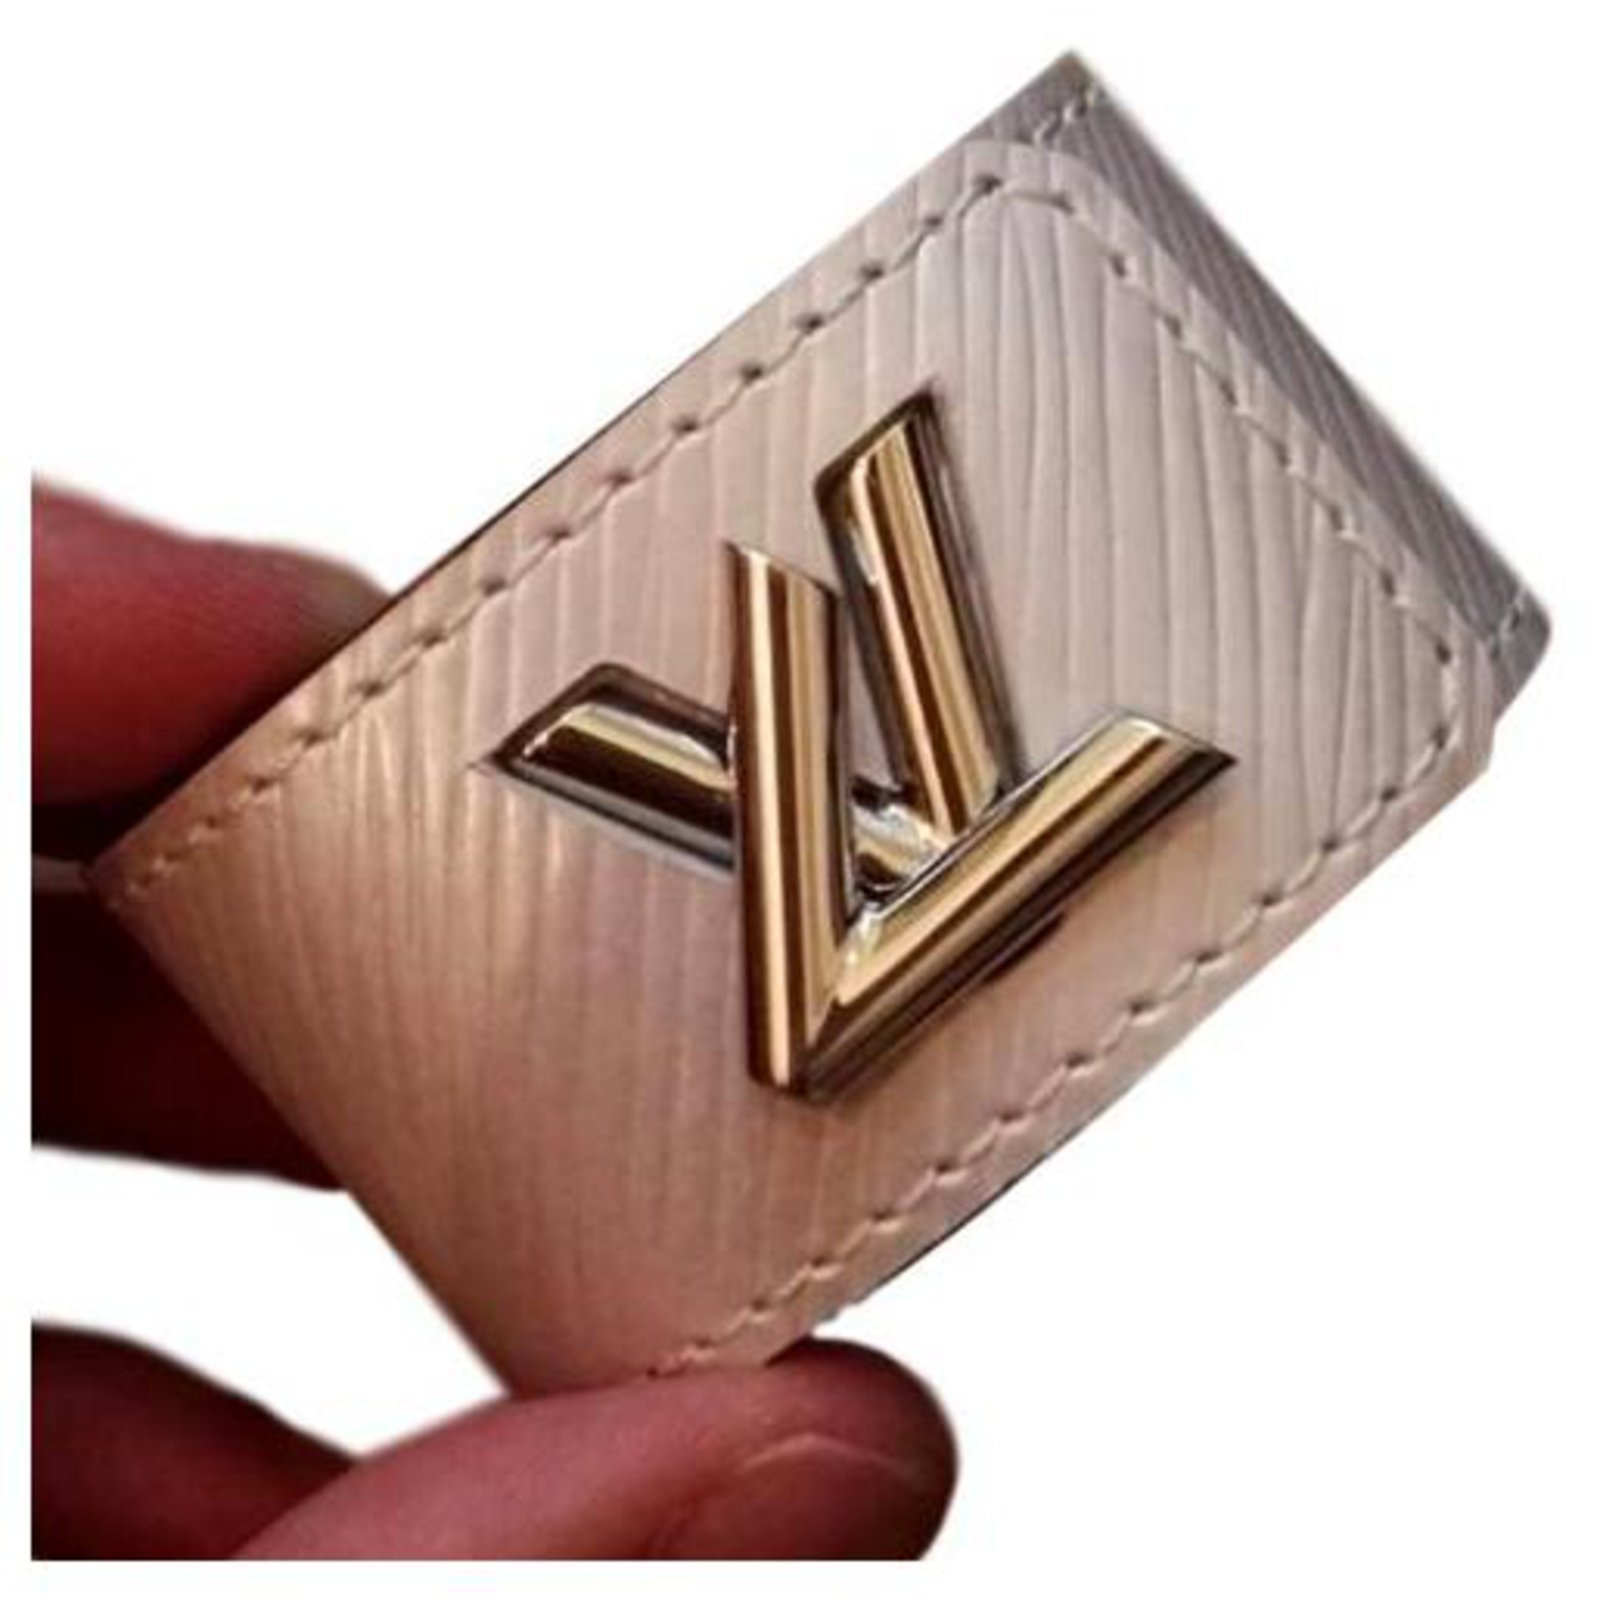 Louis Vuitton Brown / Gold Buckle Detail Fasten Your LV Monogram